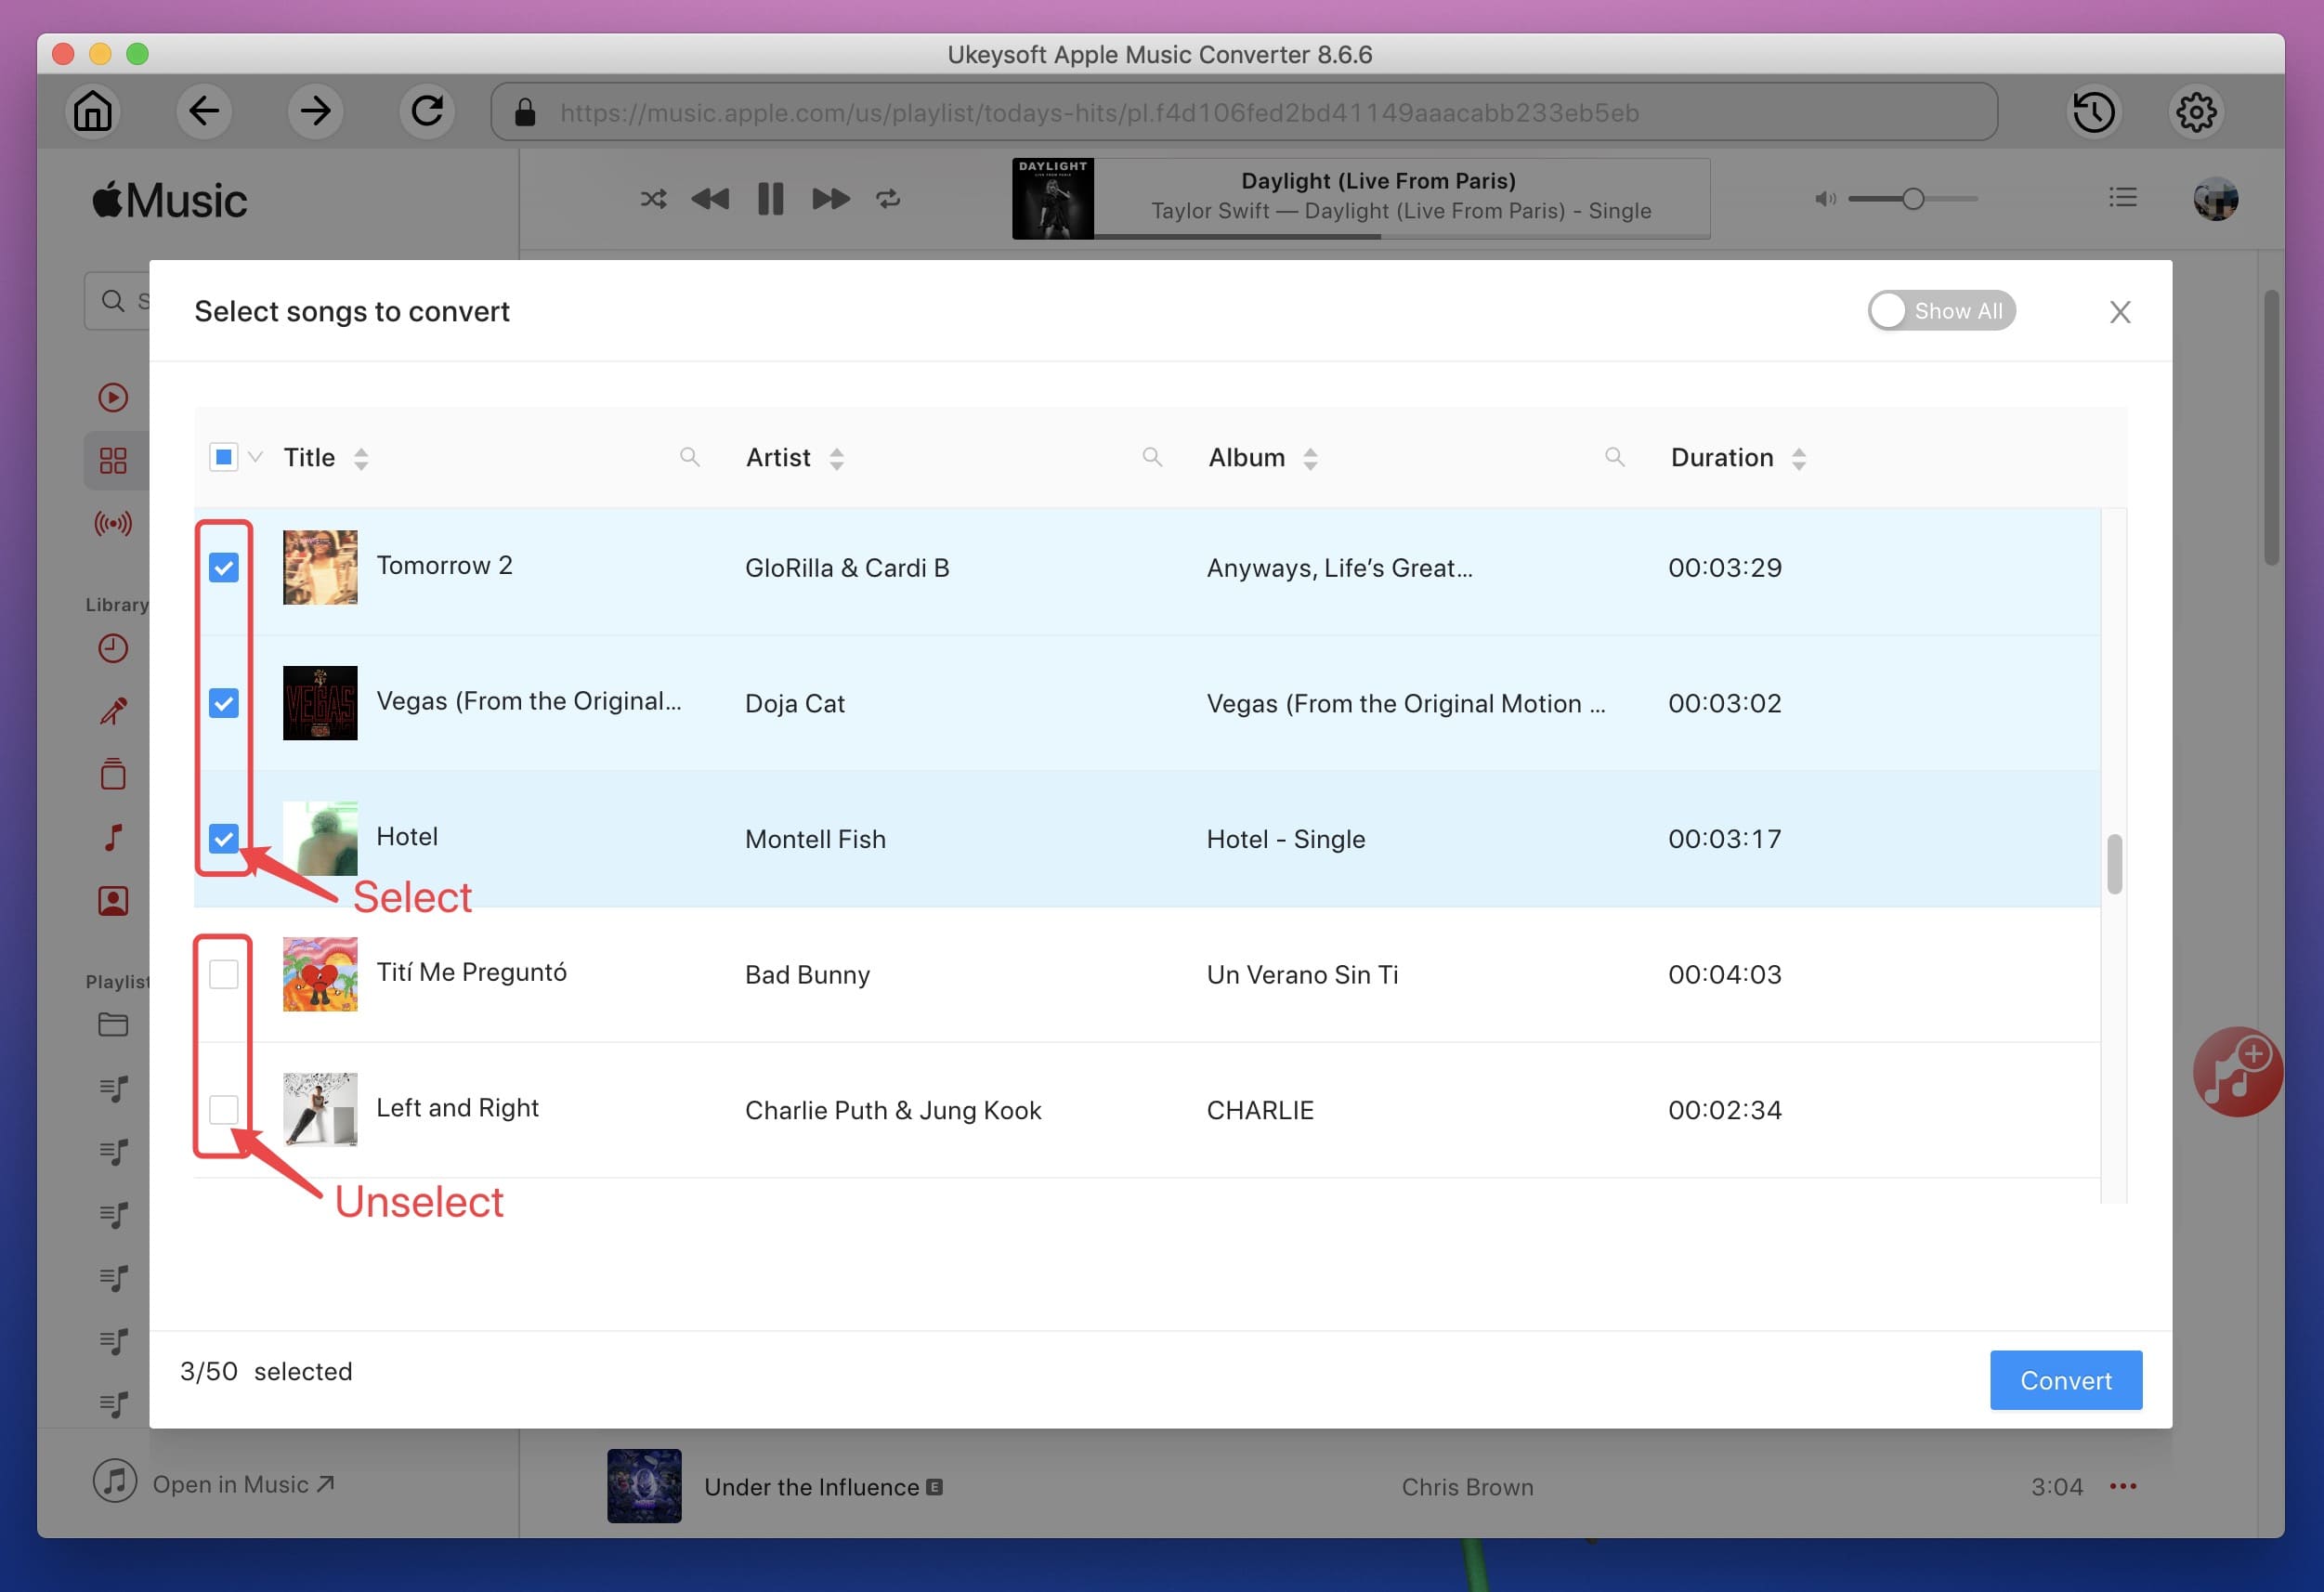 Add Apple Music Playlists to Converter